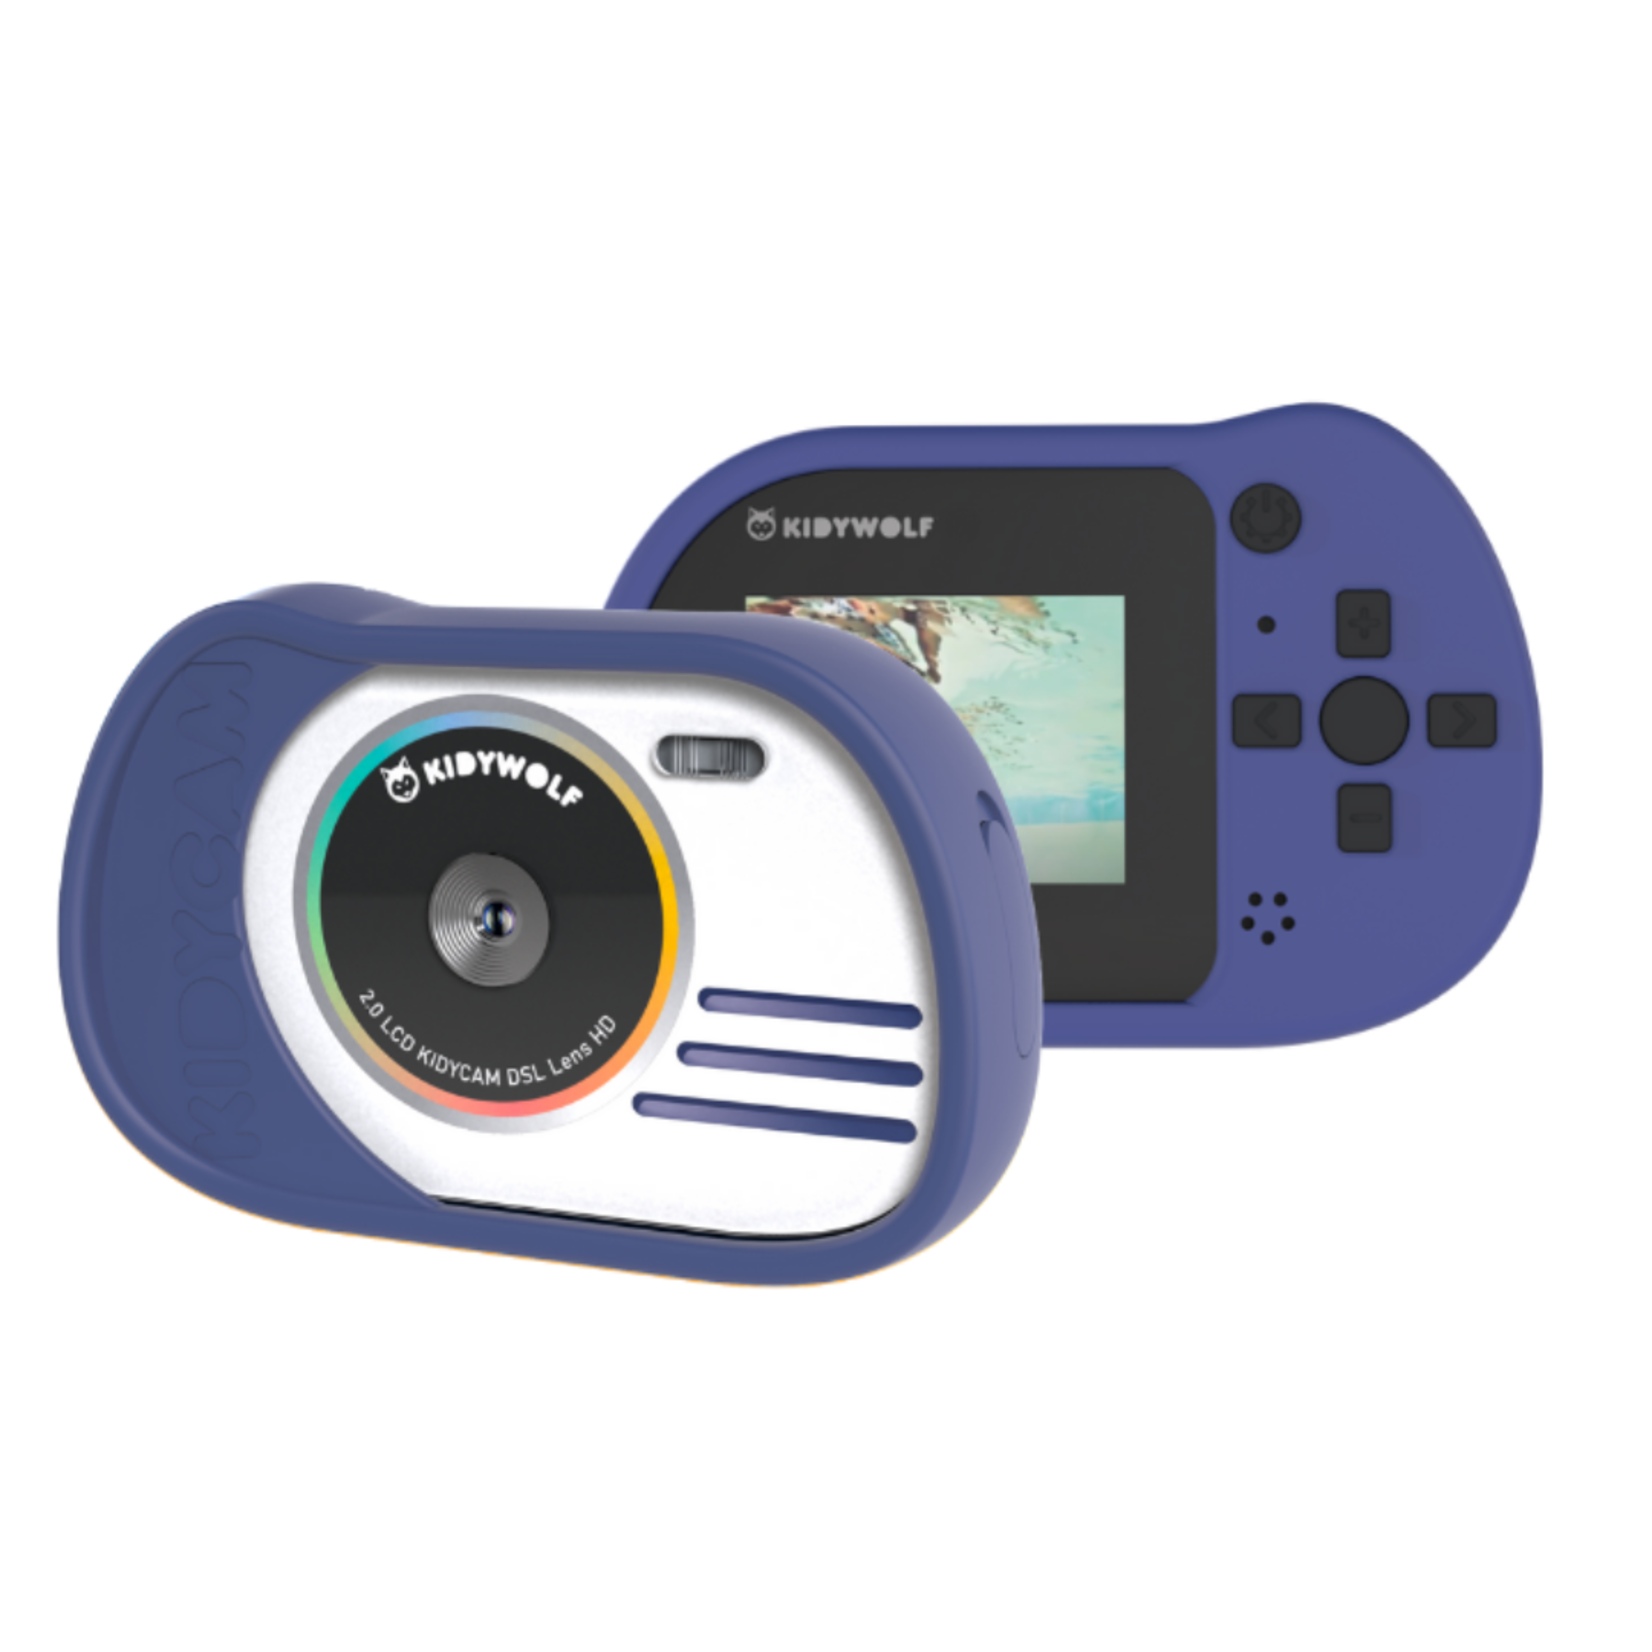 Kidywolf Kidy Camera - version bleue - acheter sur Galaxus